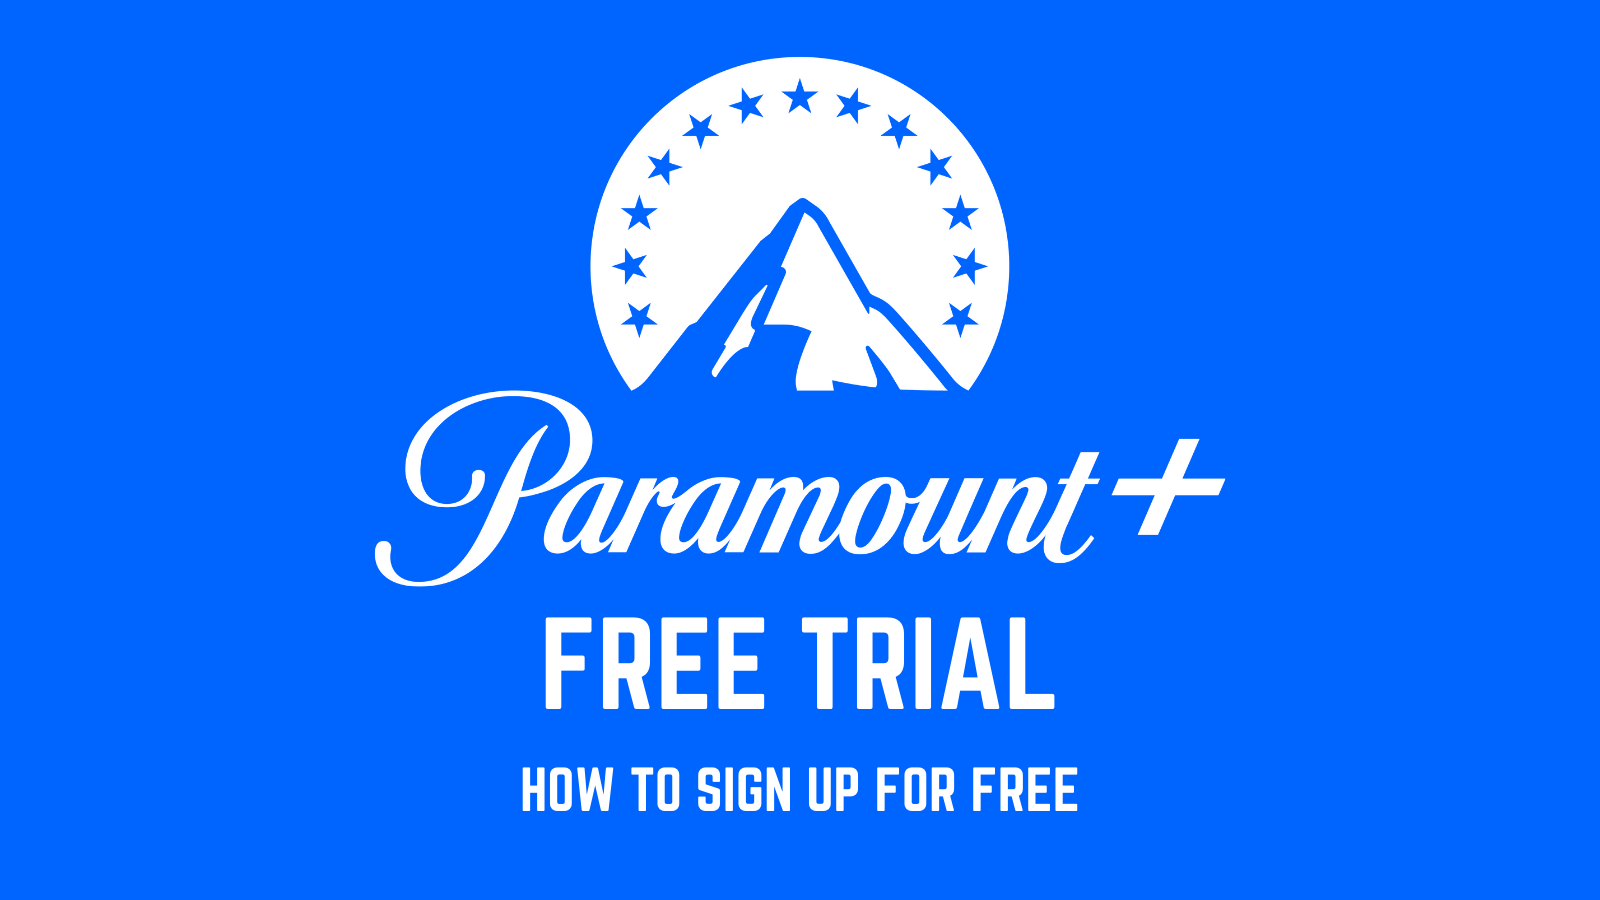 Paramount Plus Free Trial: Get 7-days free trial